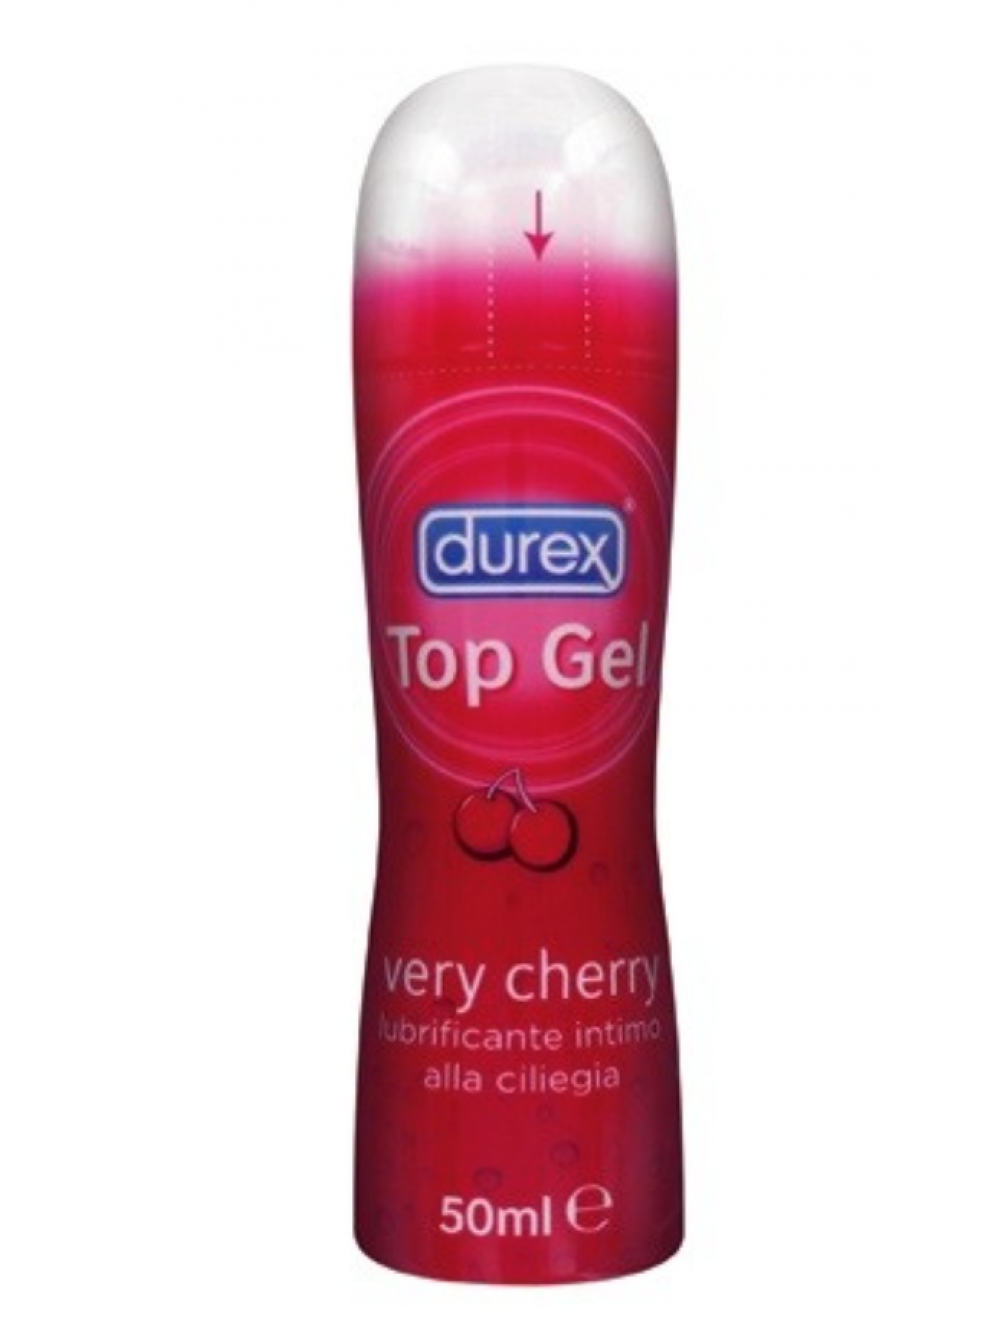 Top Gel very cherry 50 ml 5038483672280 1